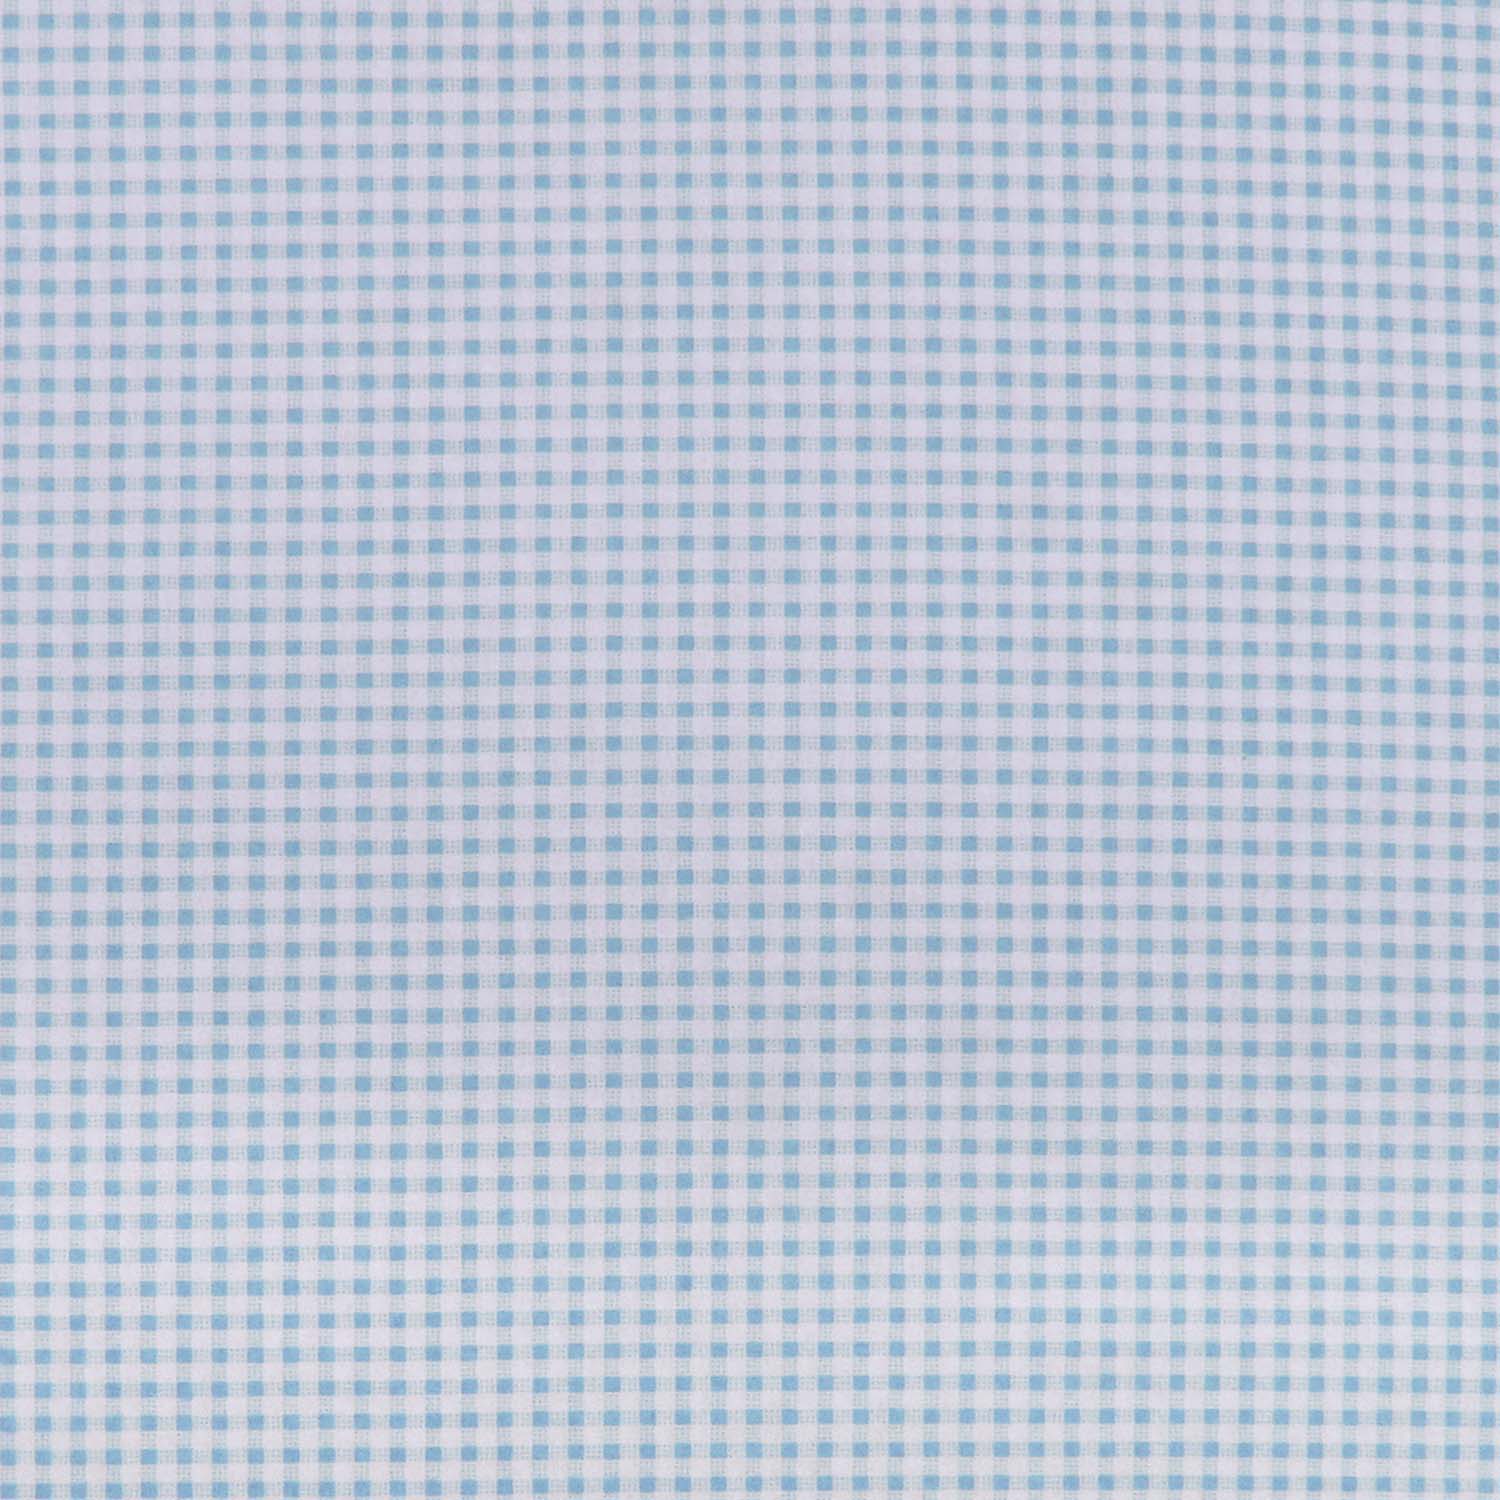 tecido-tricoline-textura-quadriculada-azul-della-aviamentos-10929